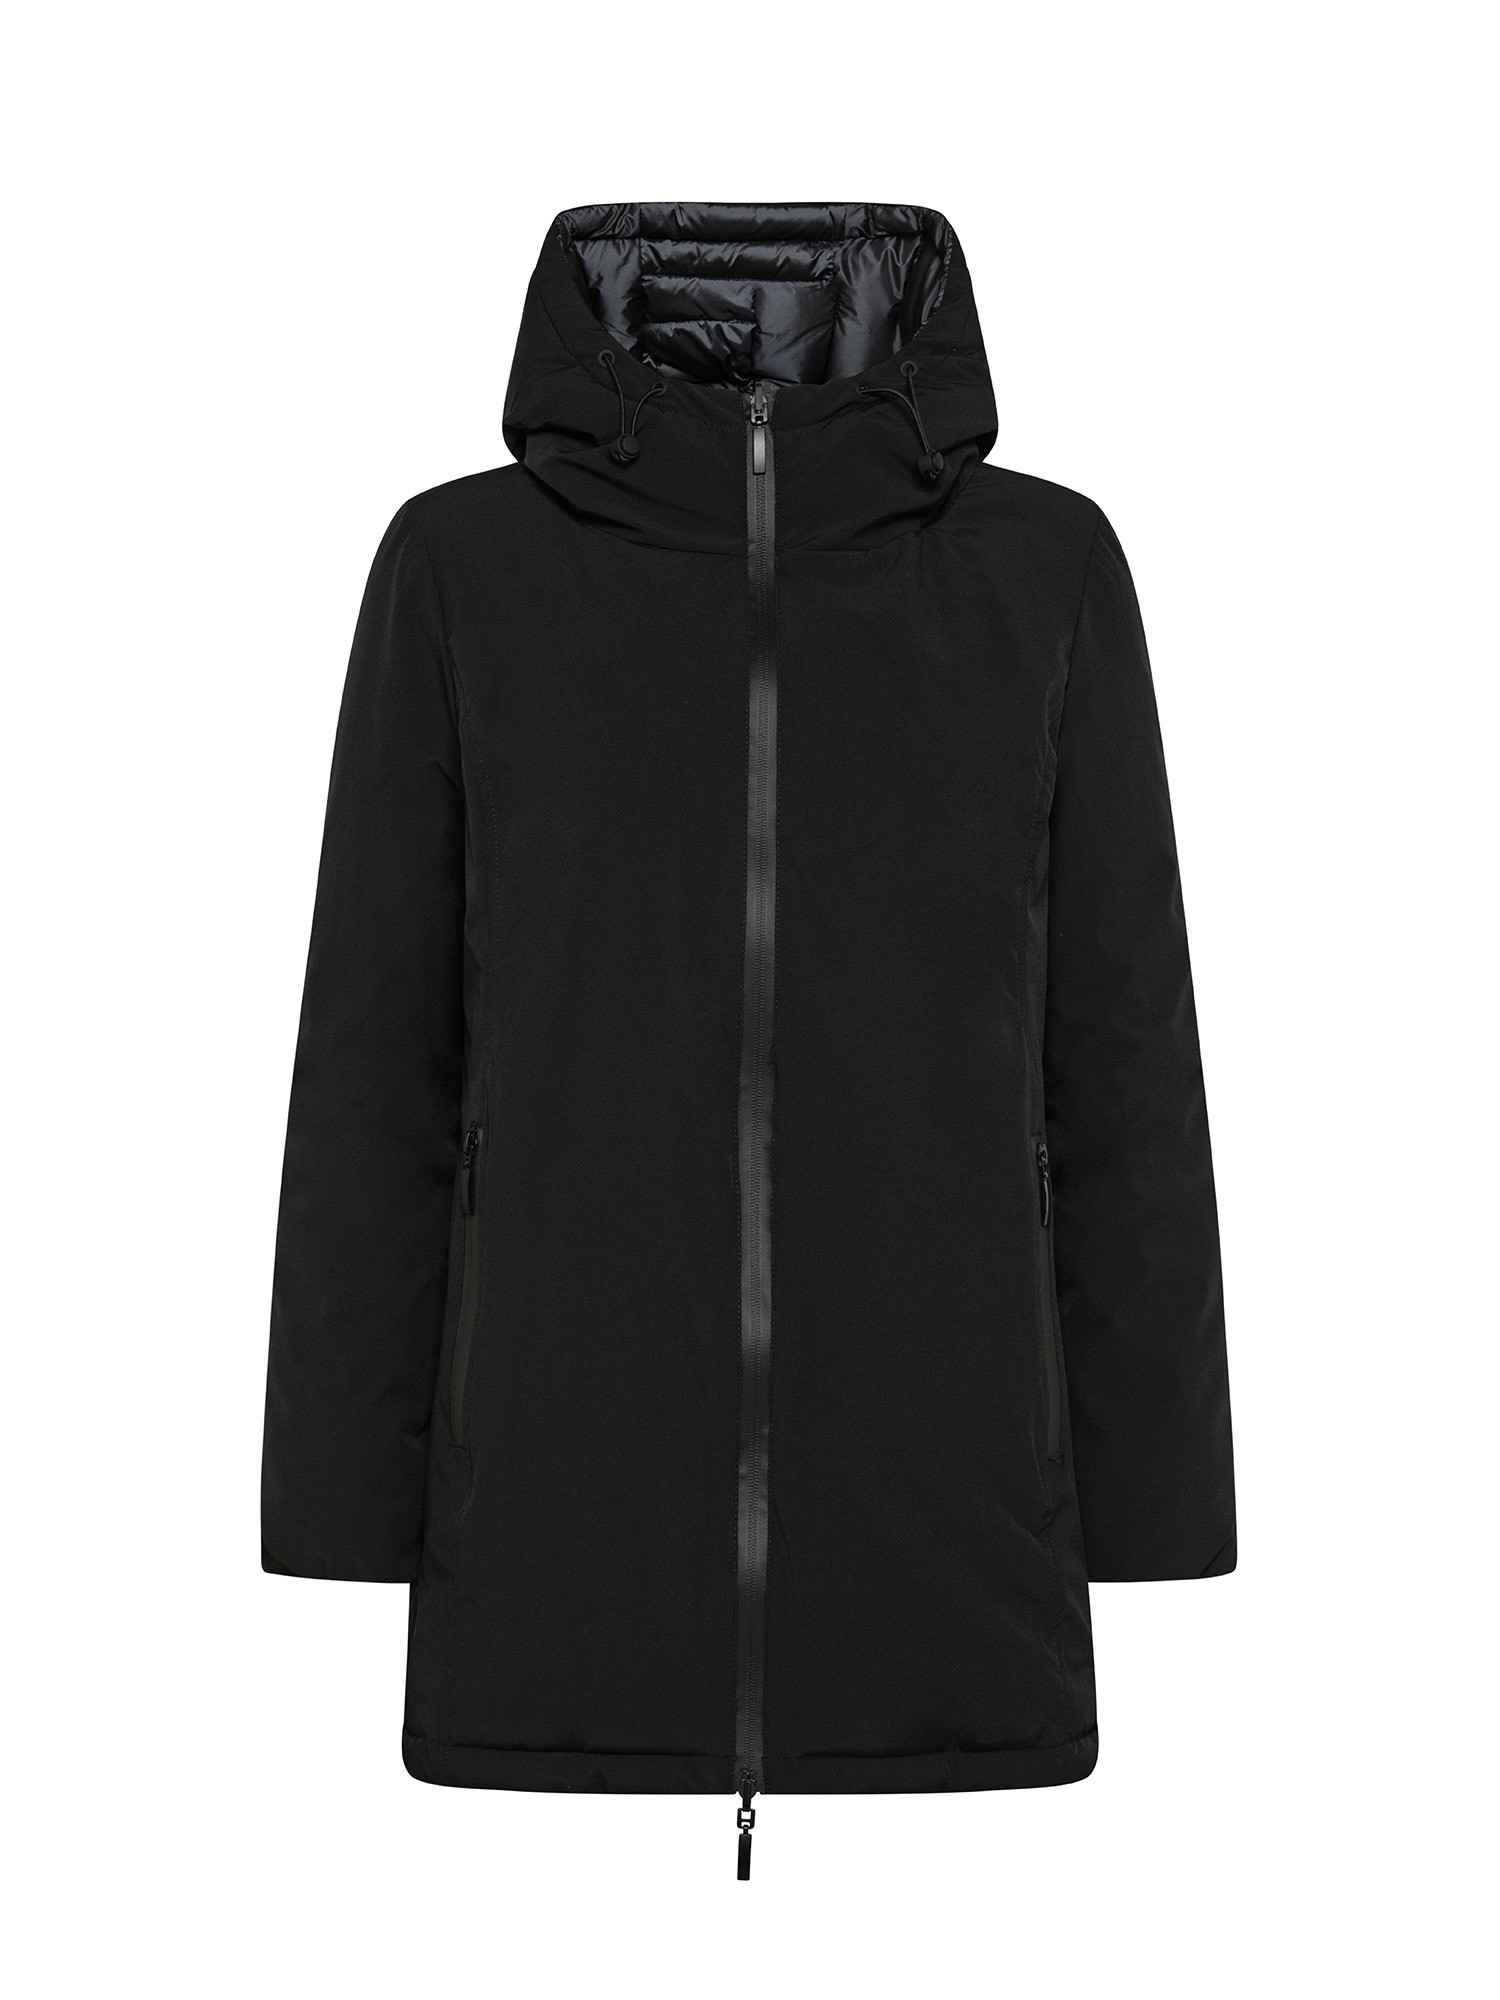 Koan - Reversible down jacket, Black, large image number 0